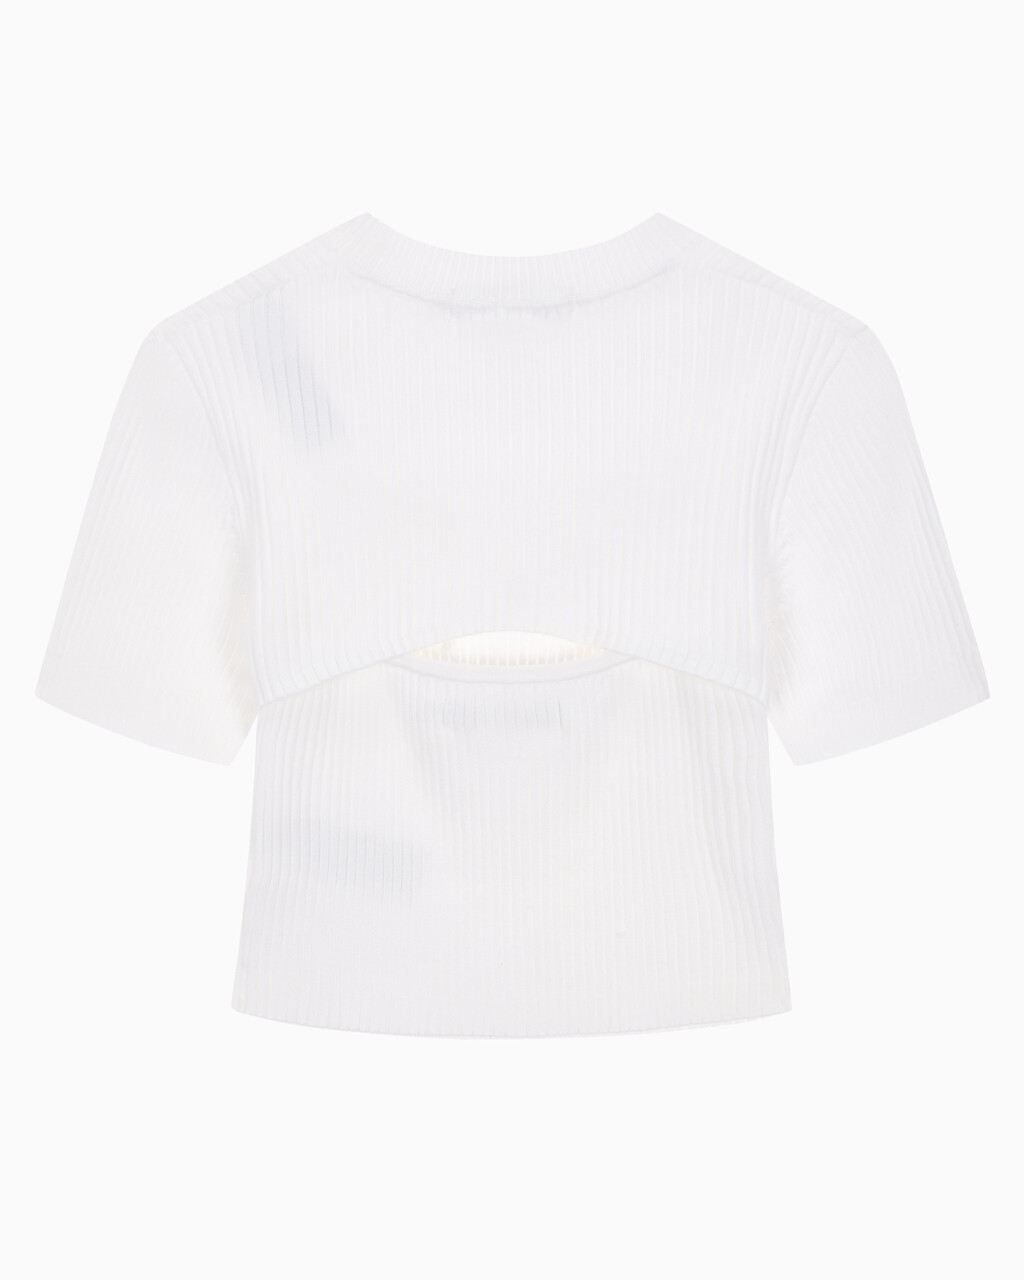 Buy 여성 3 IN 1 립 반팔 스웨터 in color BRIGHT WHITE